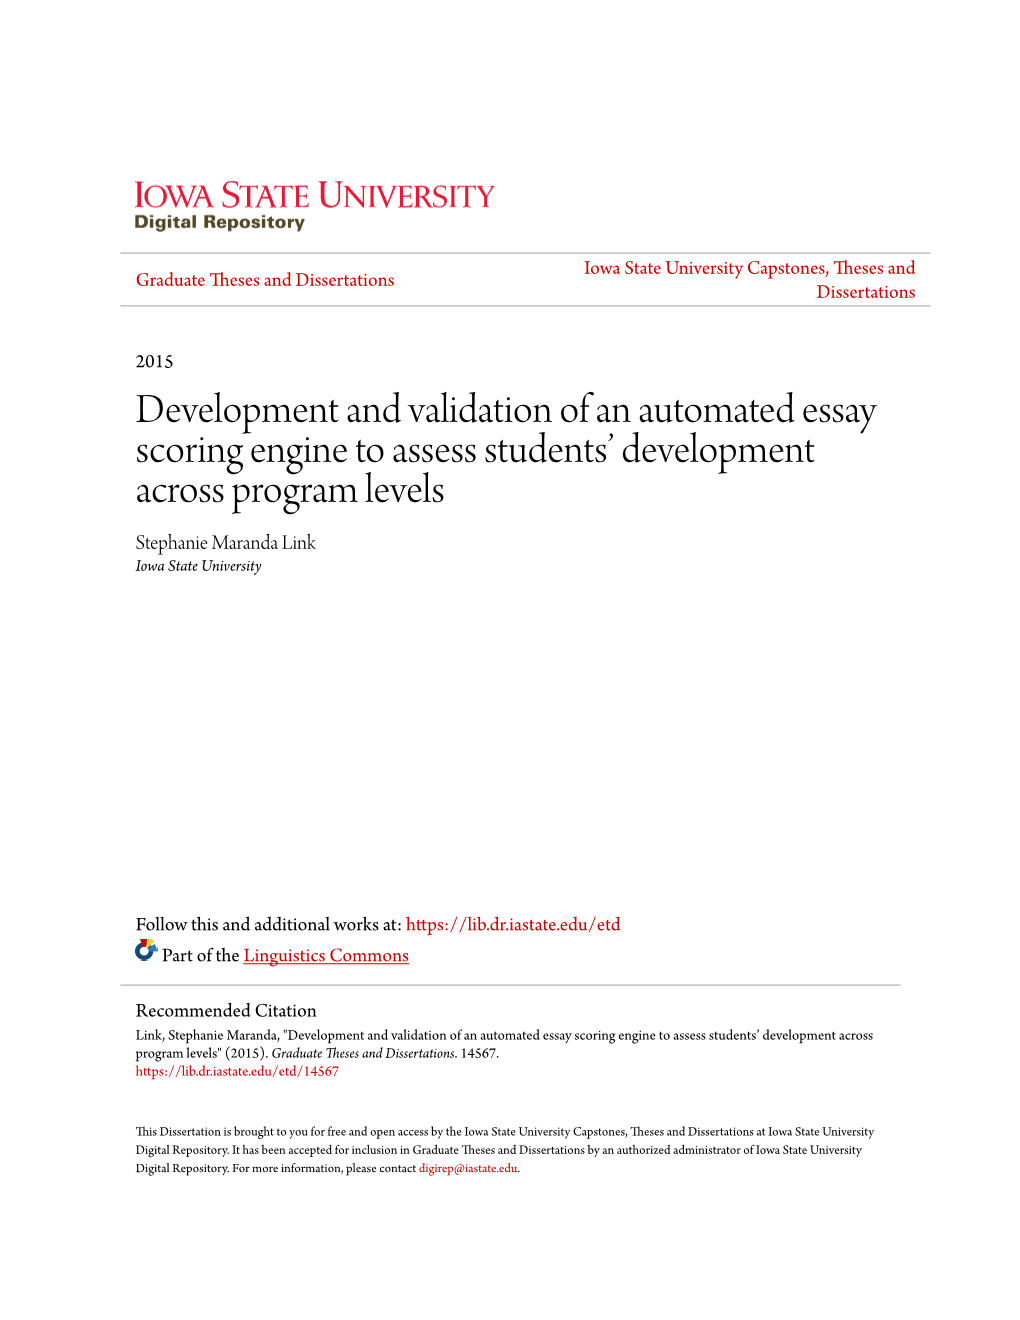 Development and Validation of an Automated Essay Scoring Engine to Assess Students’ Development Across Program Levels Stephanie Maranda Link Iowa State University